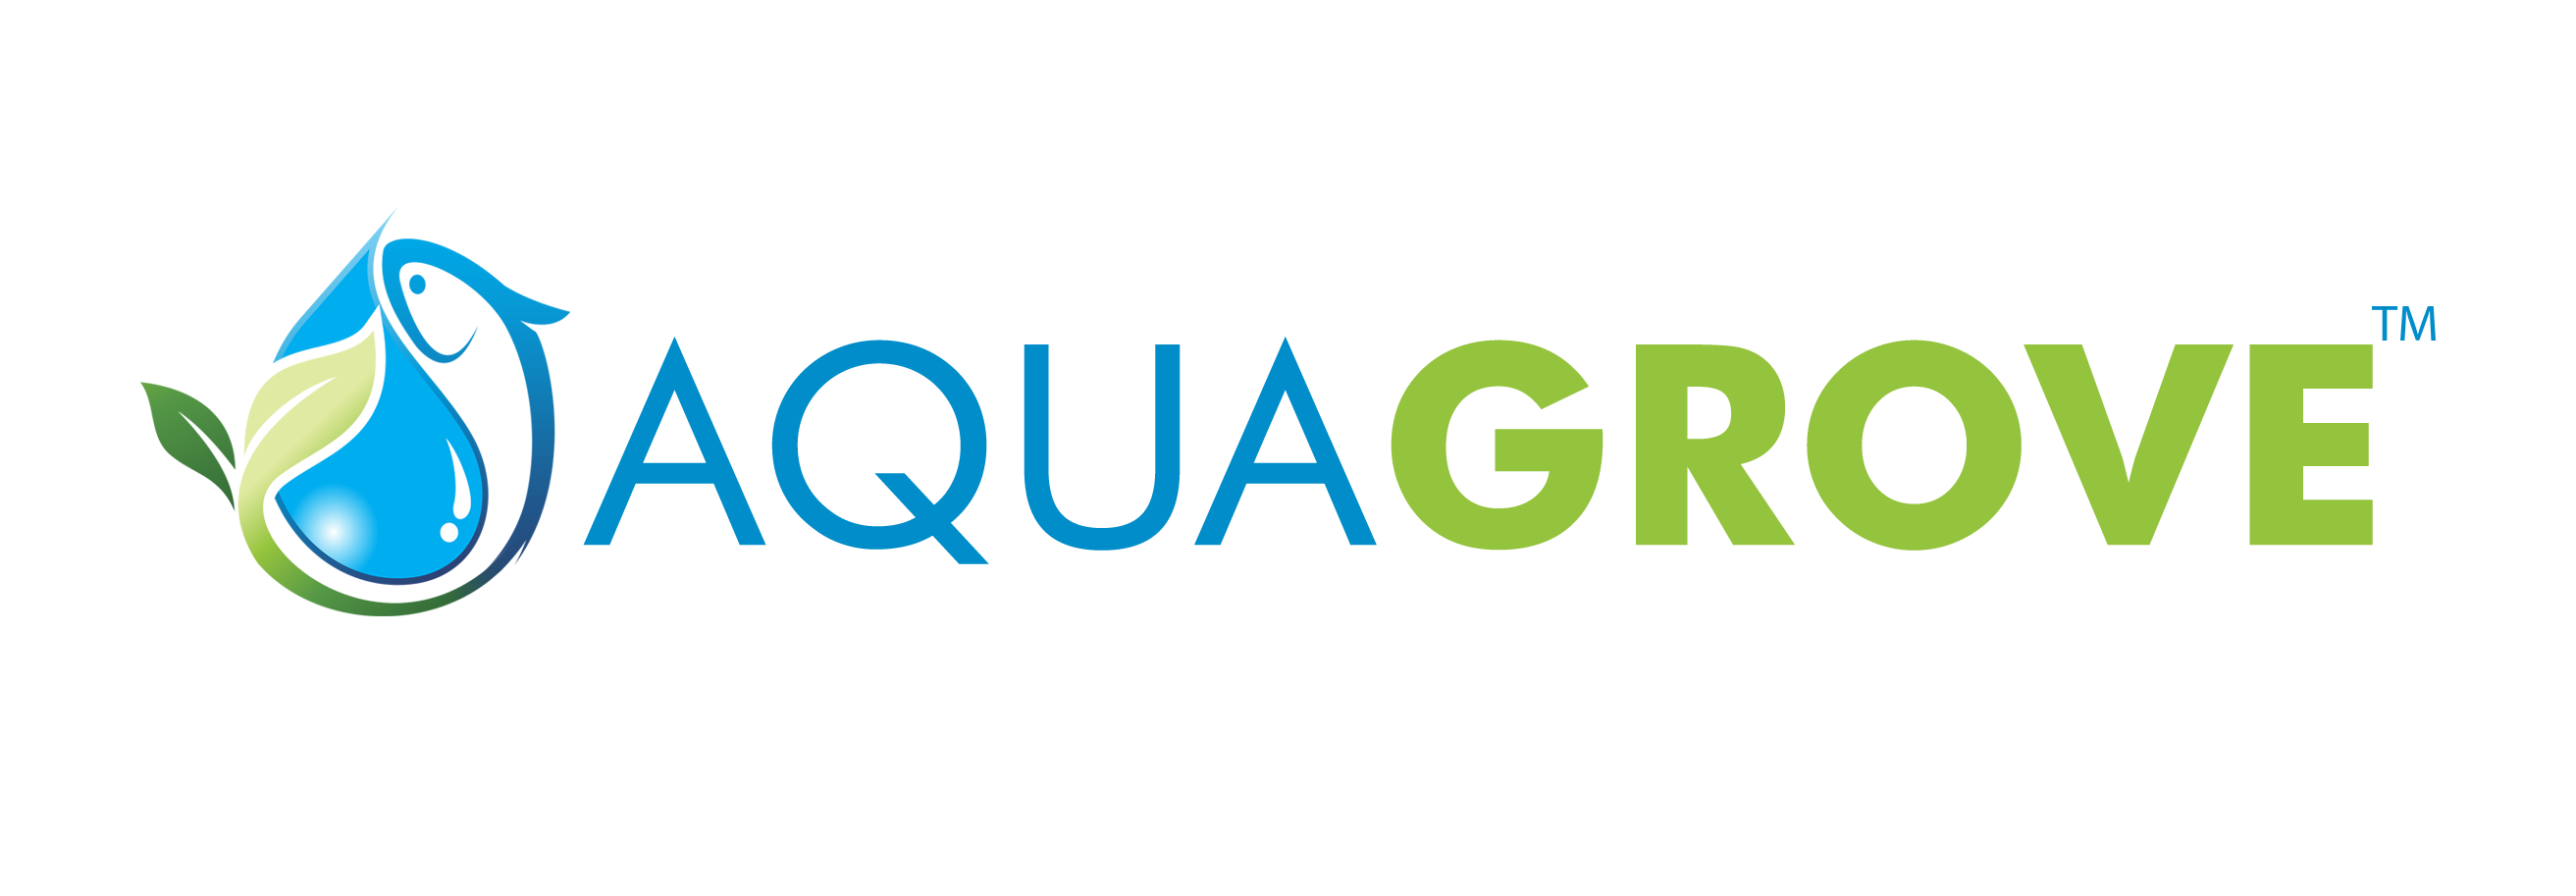 Aquagrove Logo